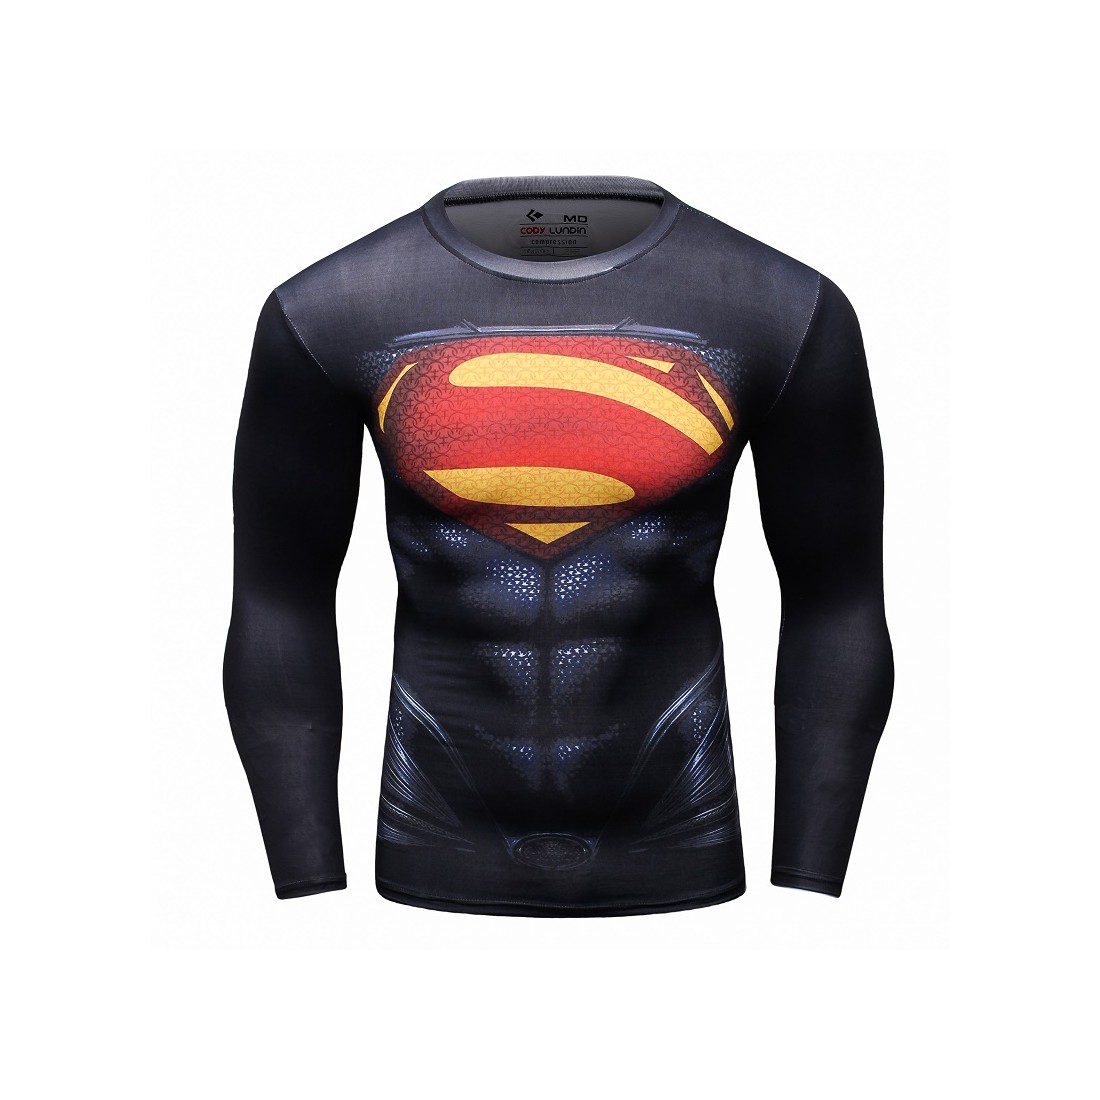 Camiseta de Compresión Hombre Superhero Superman negro rojo, manga larga  Tamaño M